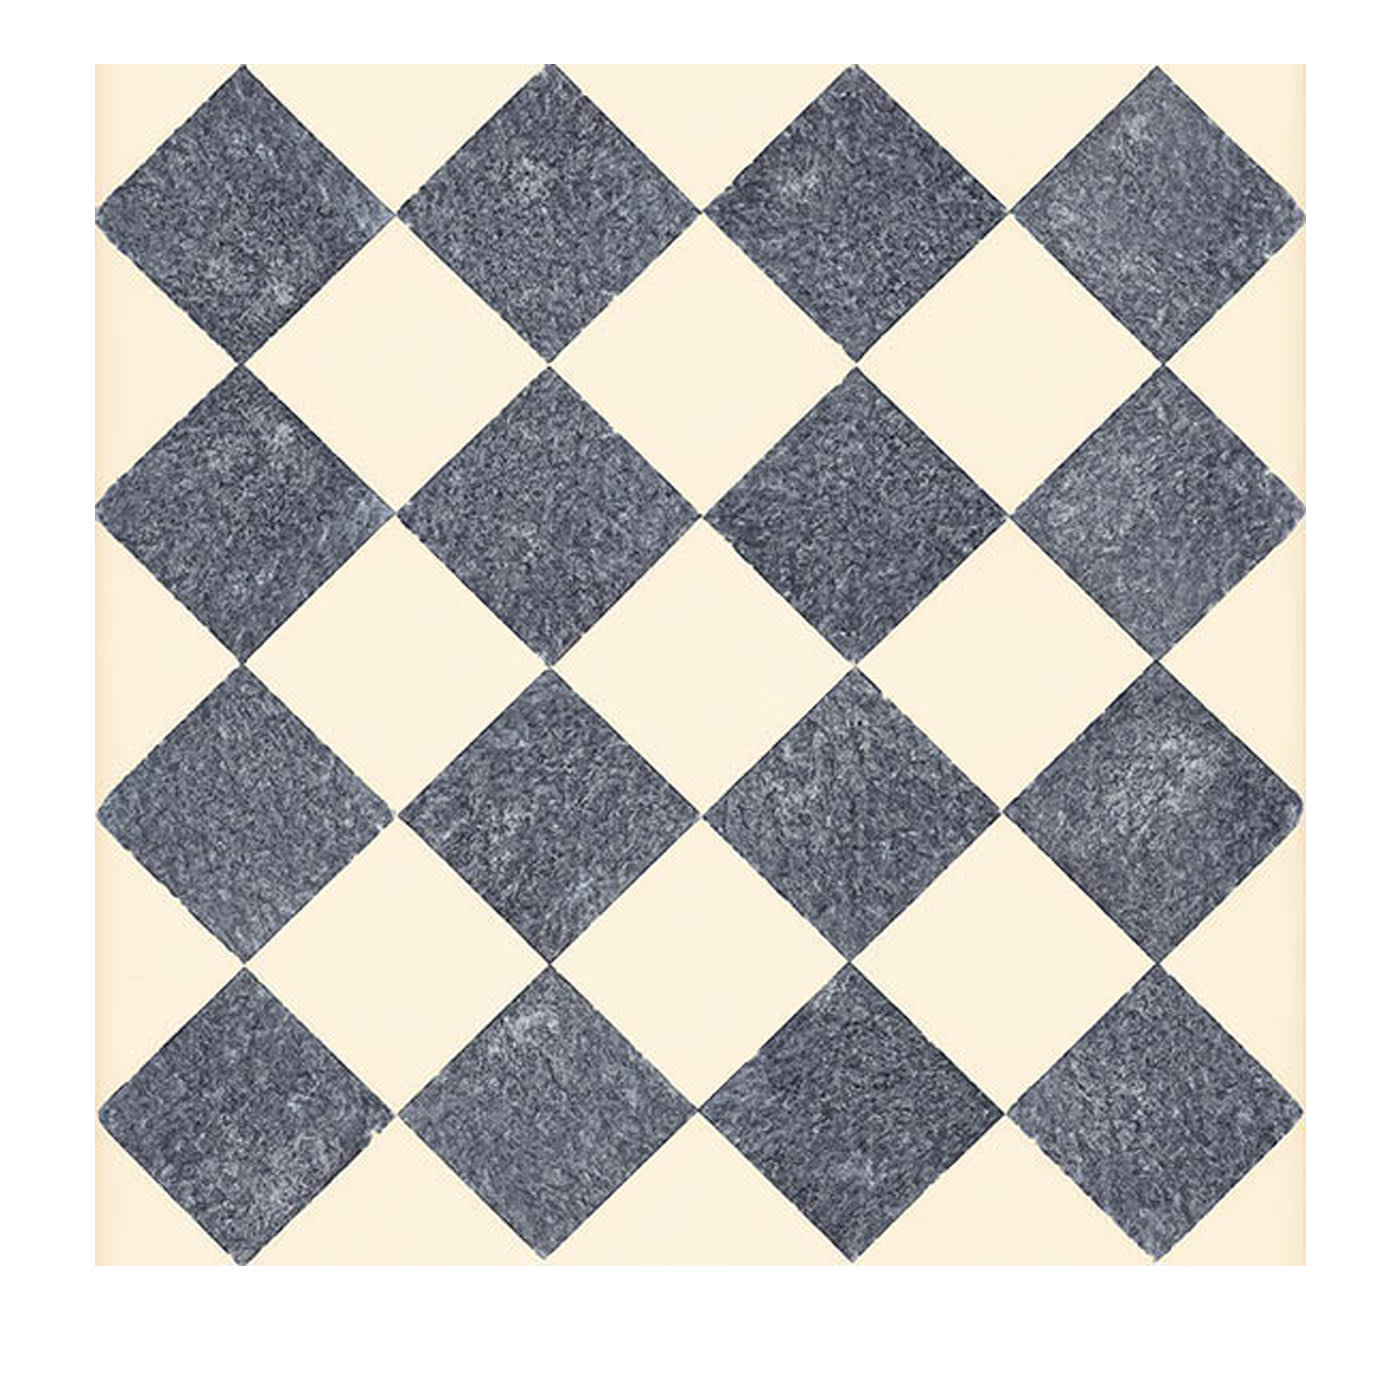 Queen 30 Grey Tiles - Ceramica Bardelli